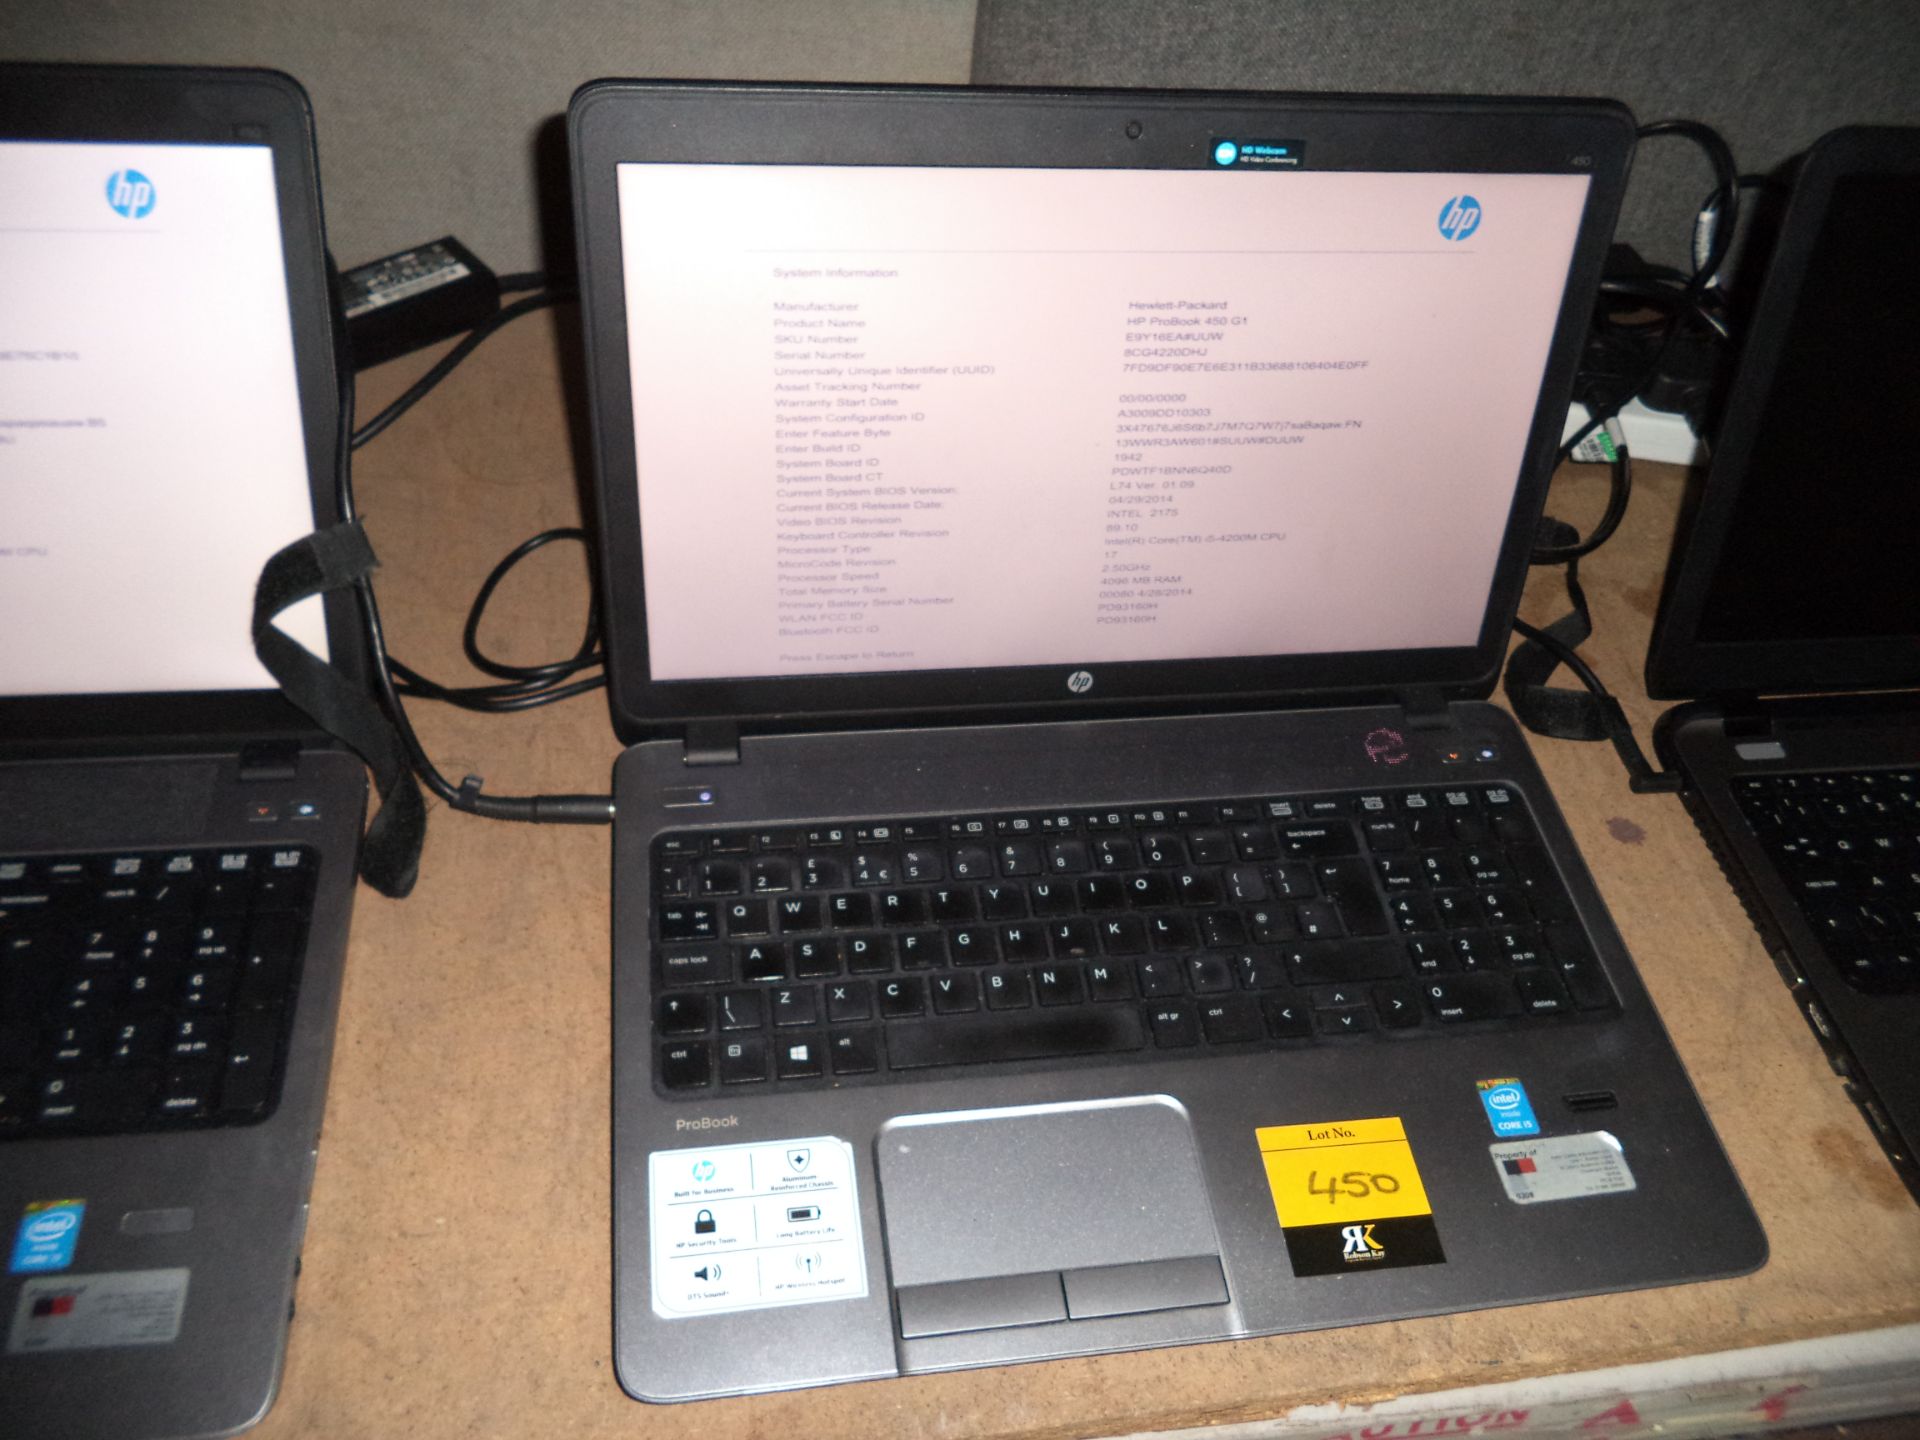 HP ProBook 450G1 notebook computer with Intel Core i5-4200M CPU @ 2.50GHz, 4Gb RAM, 15.6" widescreen